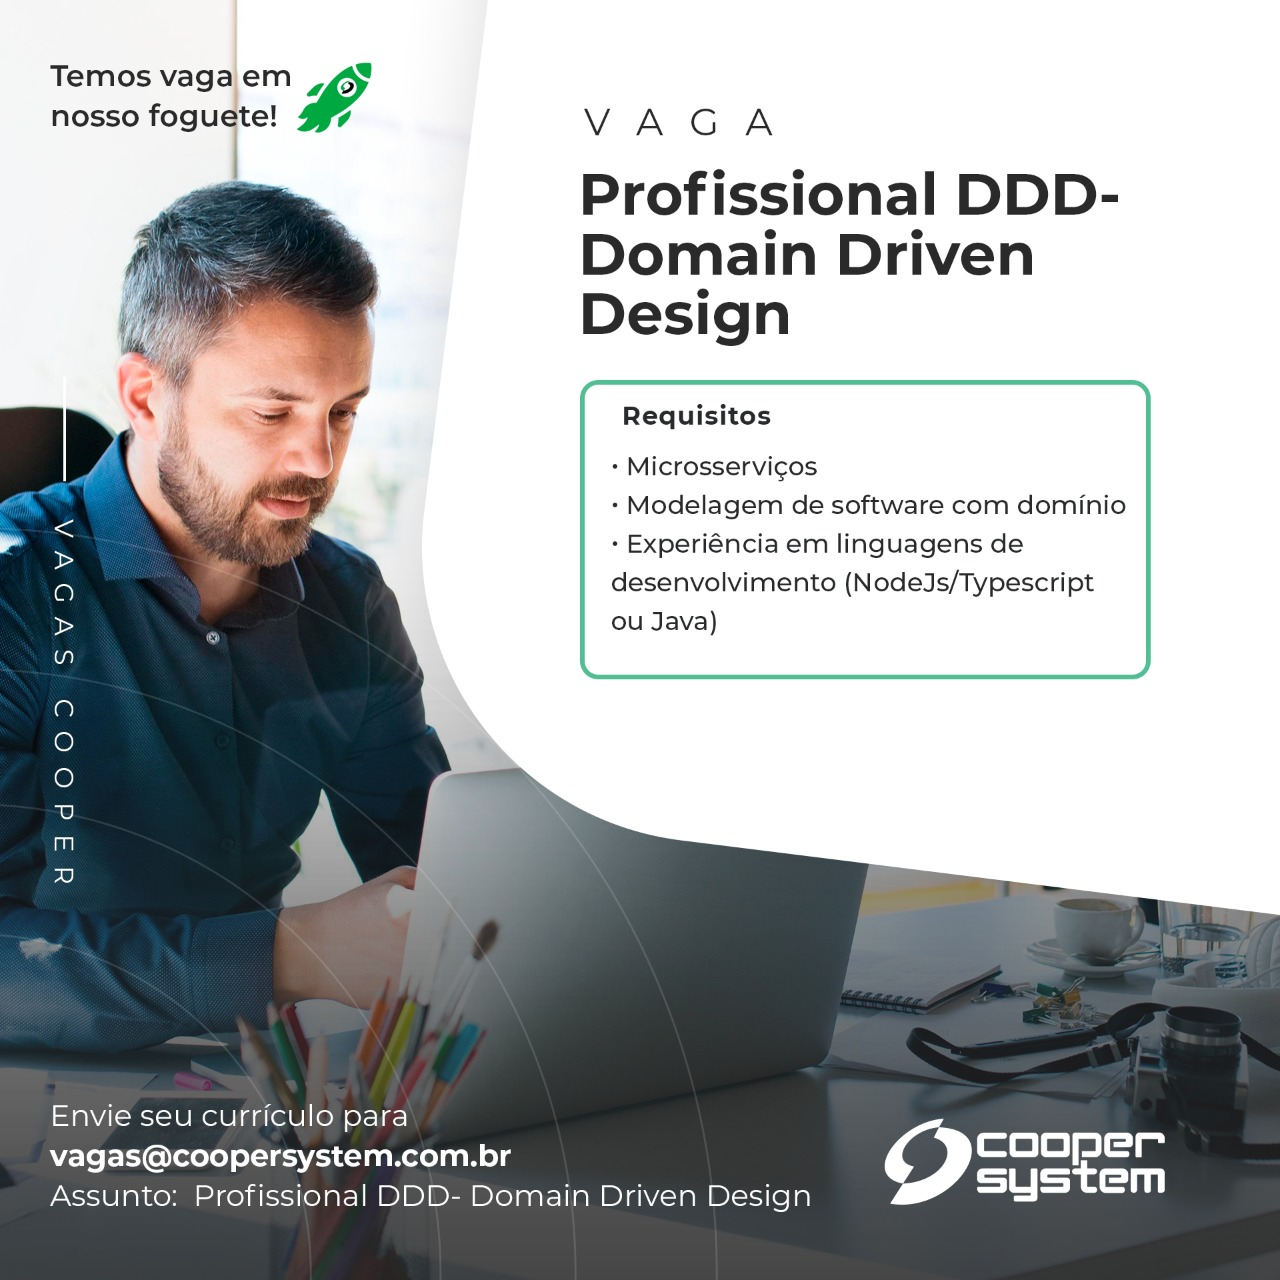 [leonardoti] Oportunidade para vaga de DDD- Domain Driven Design